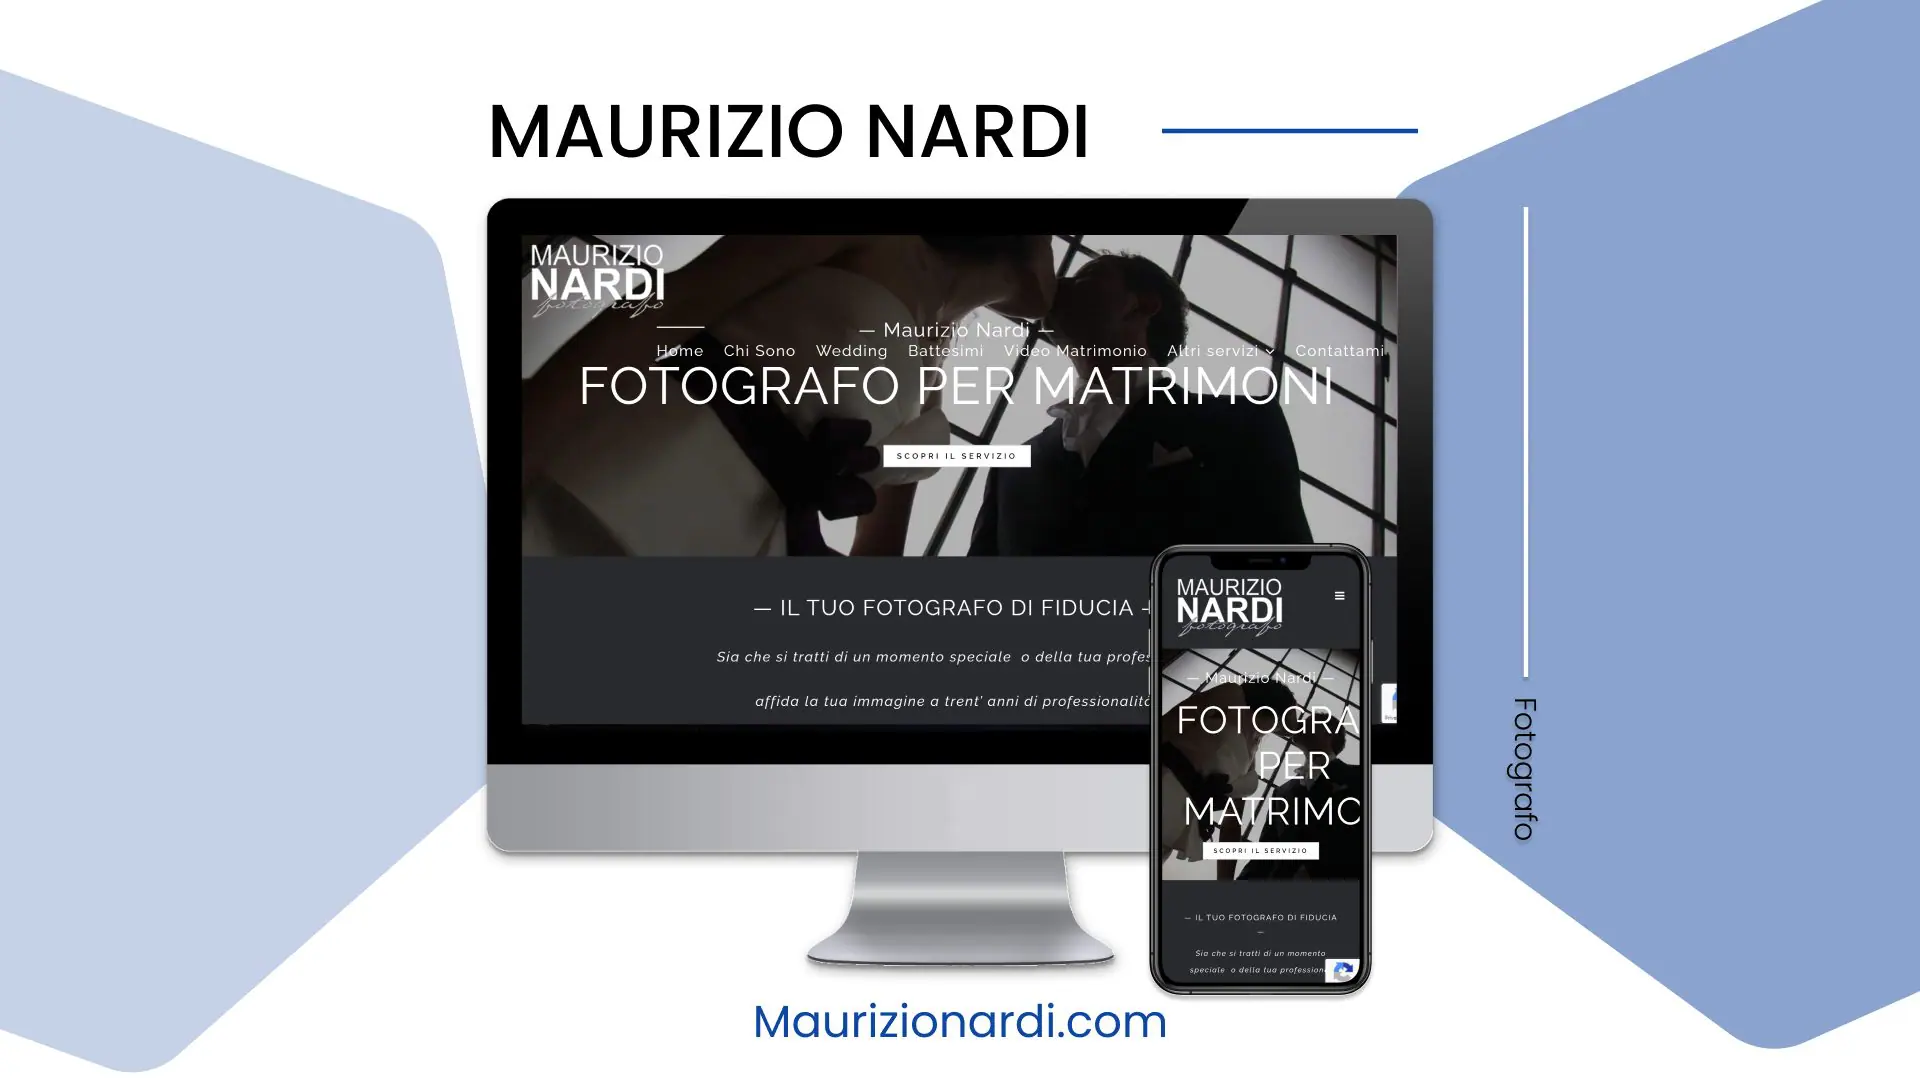 Maurizio Nardi